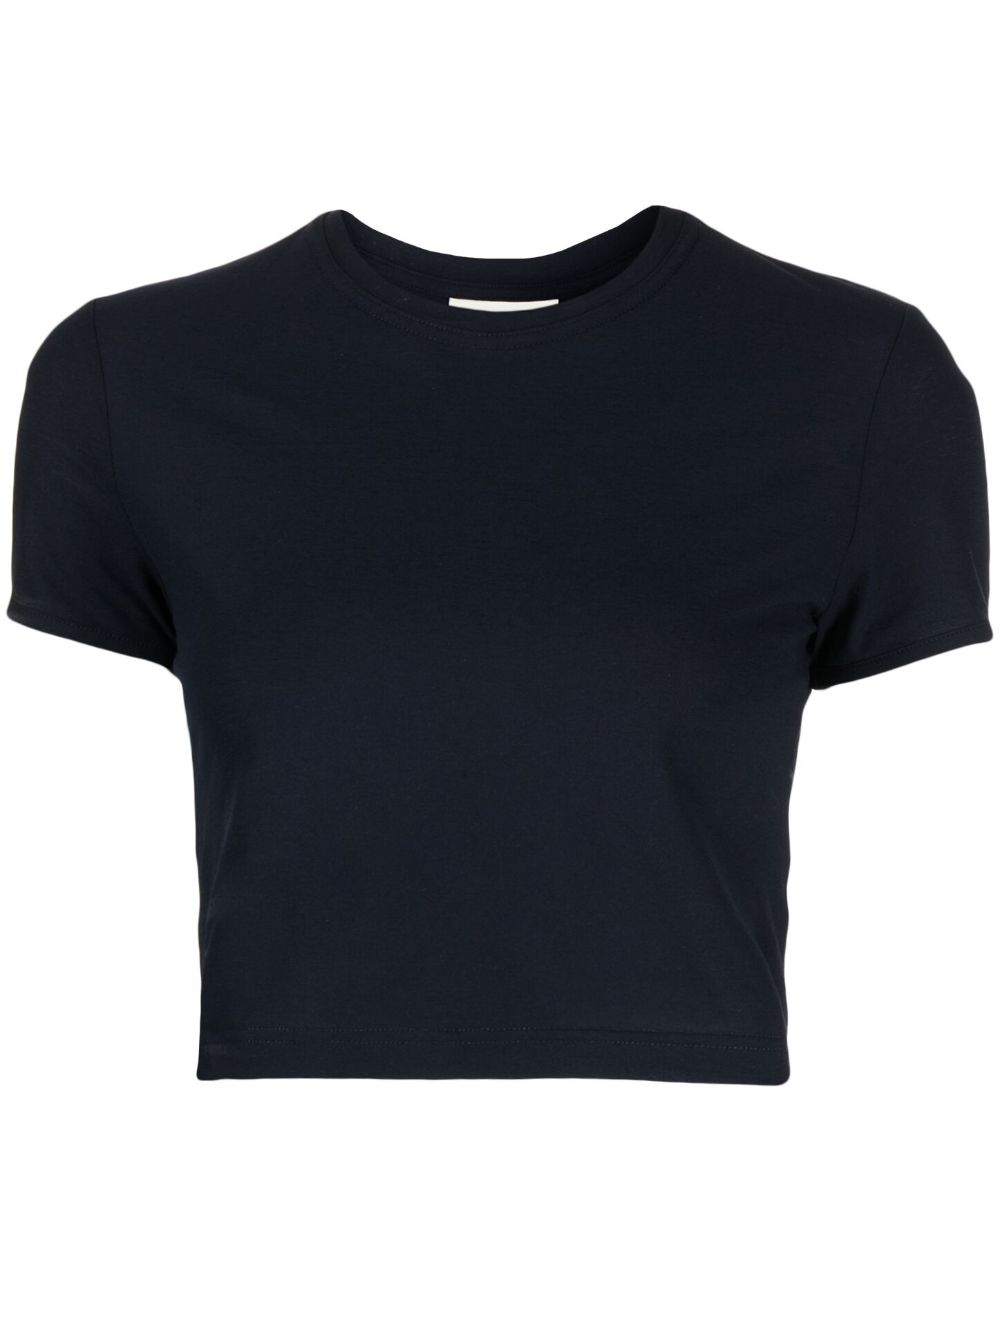 Molly Goddard Jersey Cropped T-Shirt - Farfetch